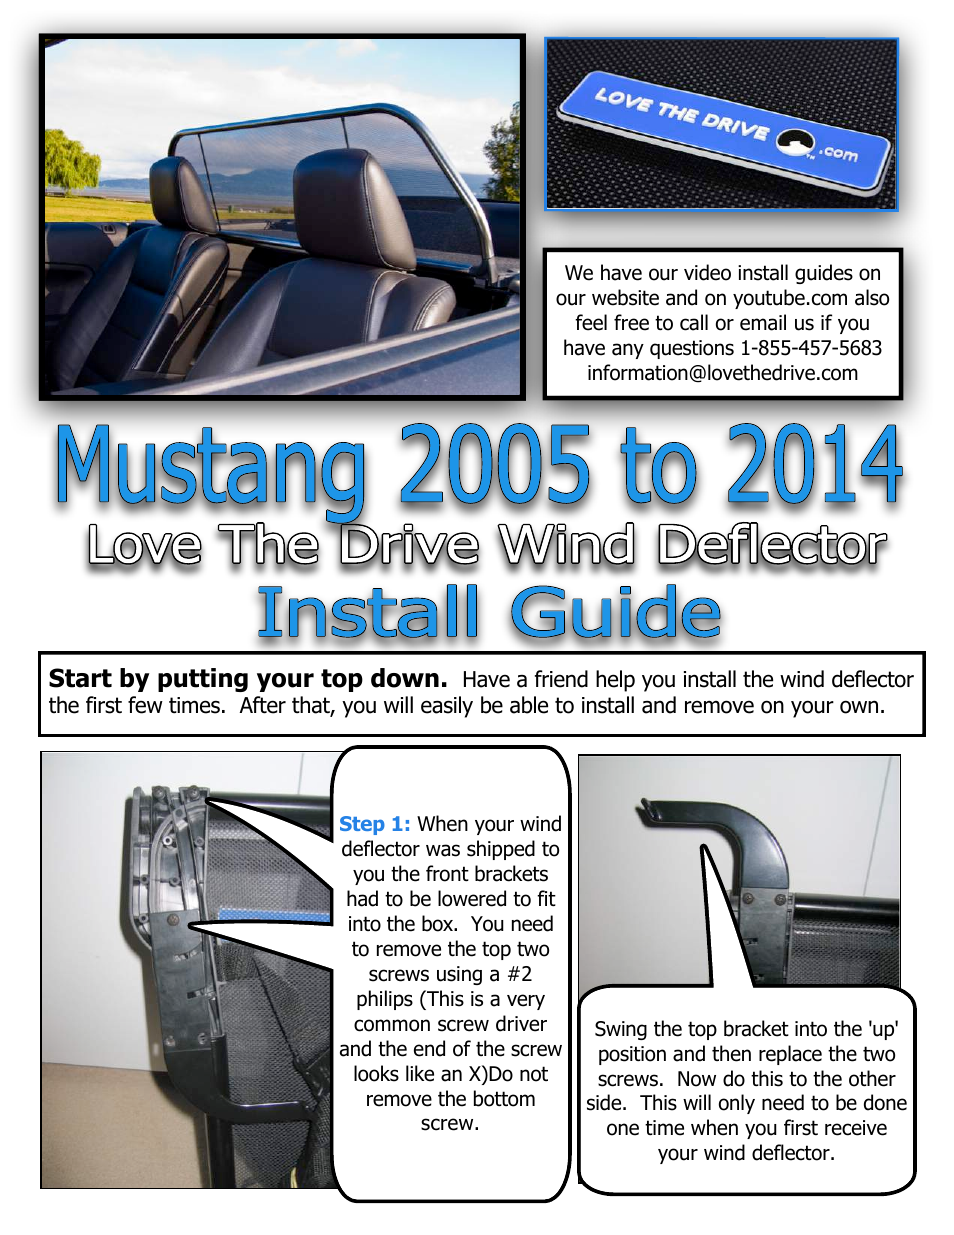 Mustang Wind Deflector 2005 to 2014